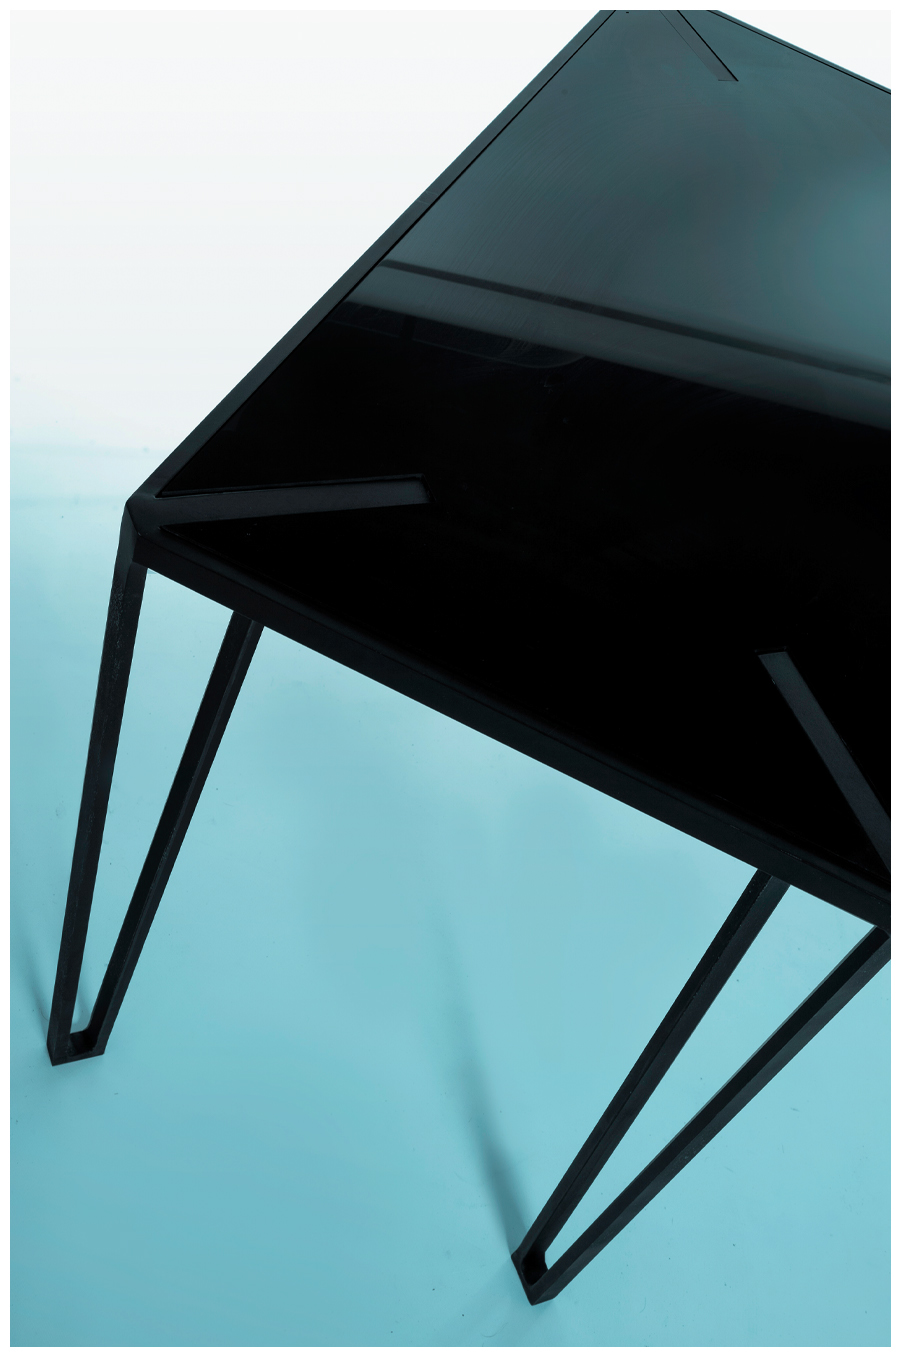 desk design desk table Minimalism minimal furniture product black industrial